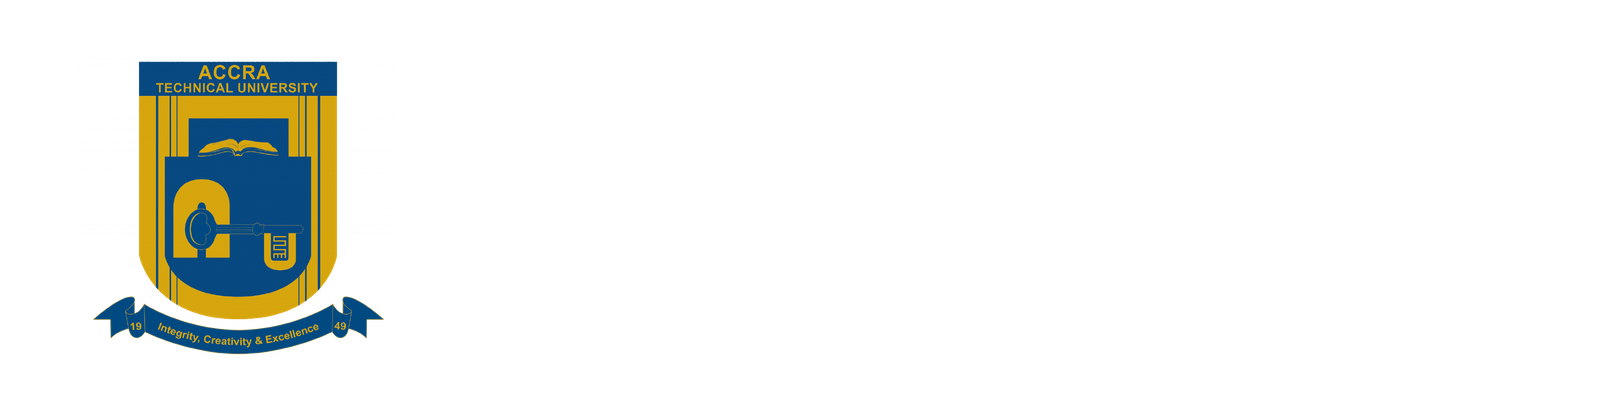 Accra Technical University Online